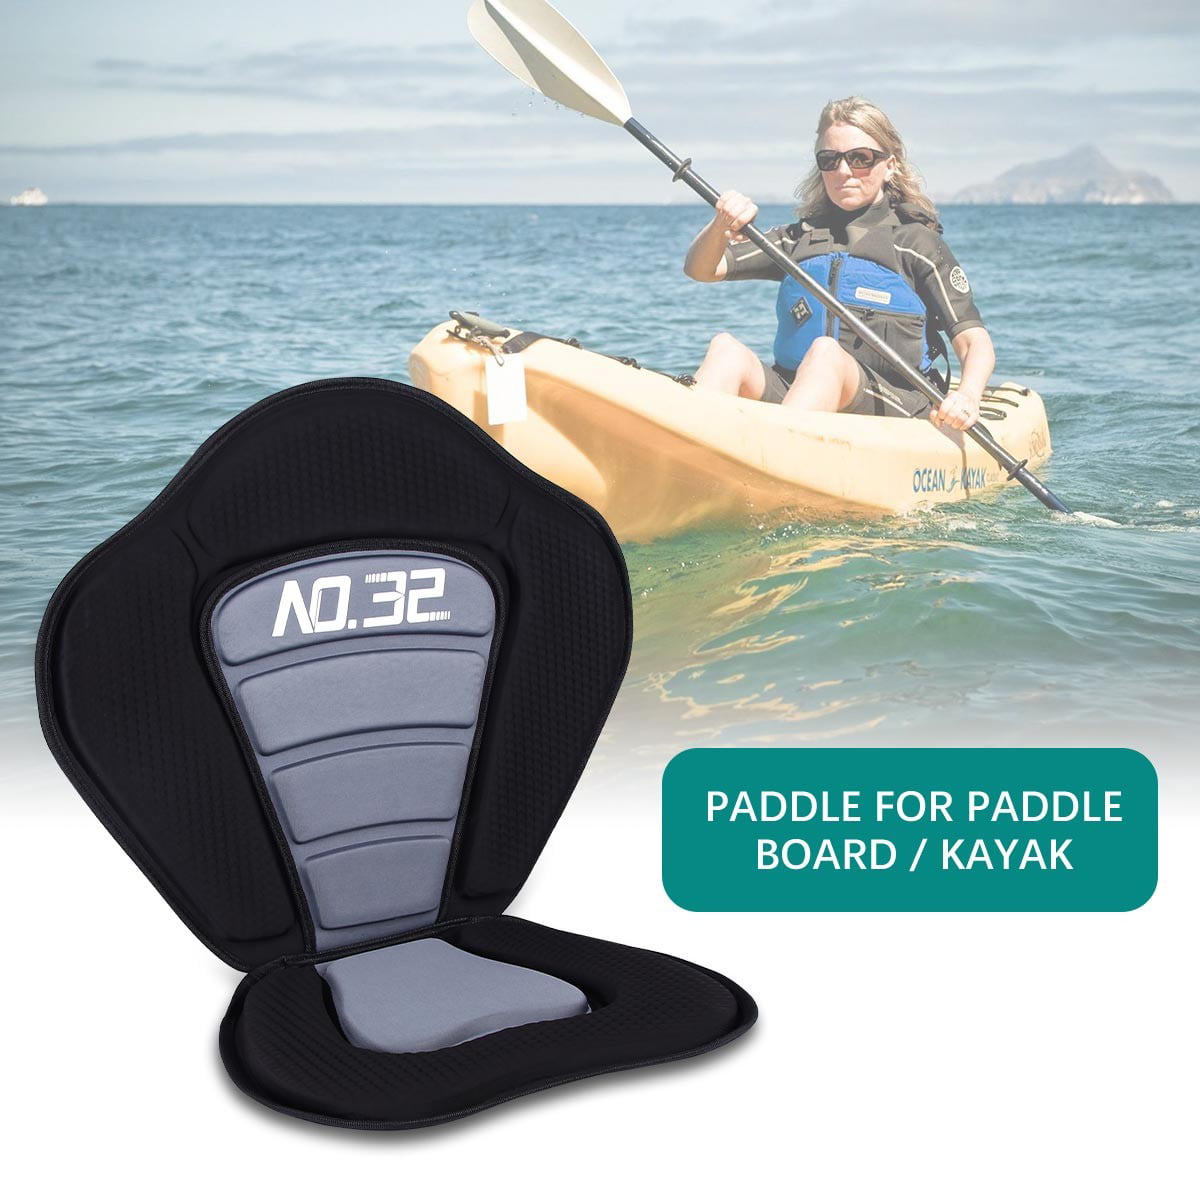 Deluxe Kayak Seat Adjustable Padded Detachable Canoe Back Rest Cushion 